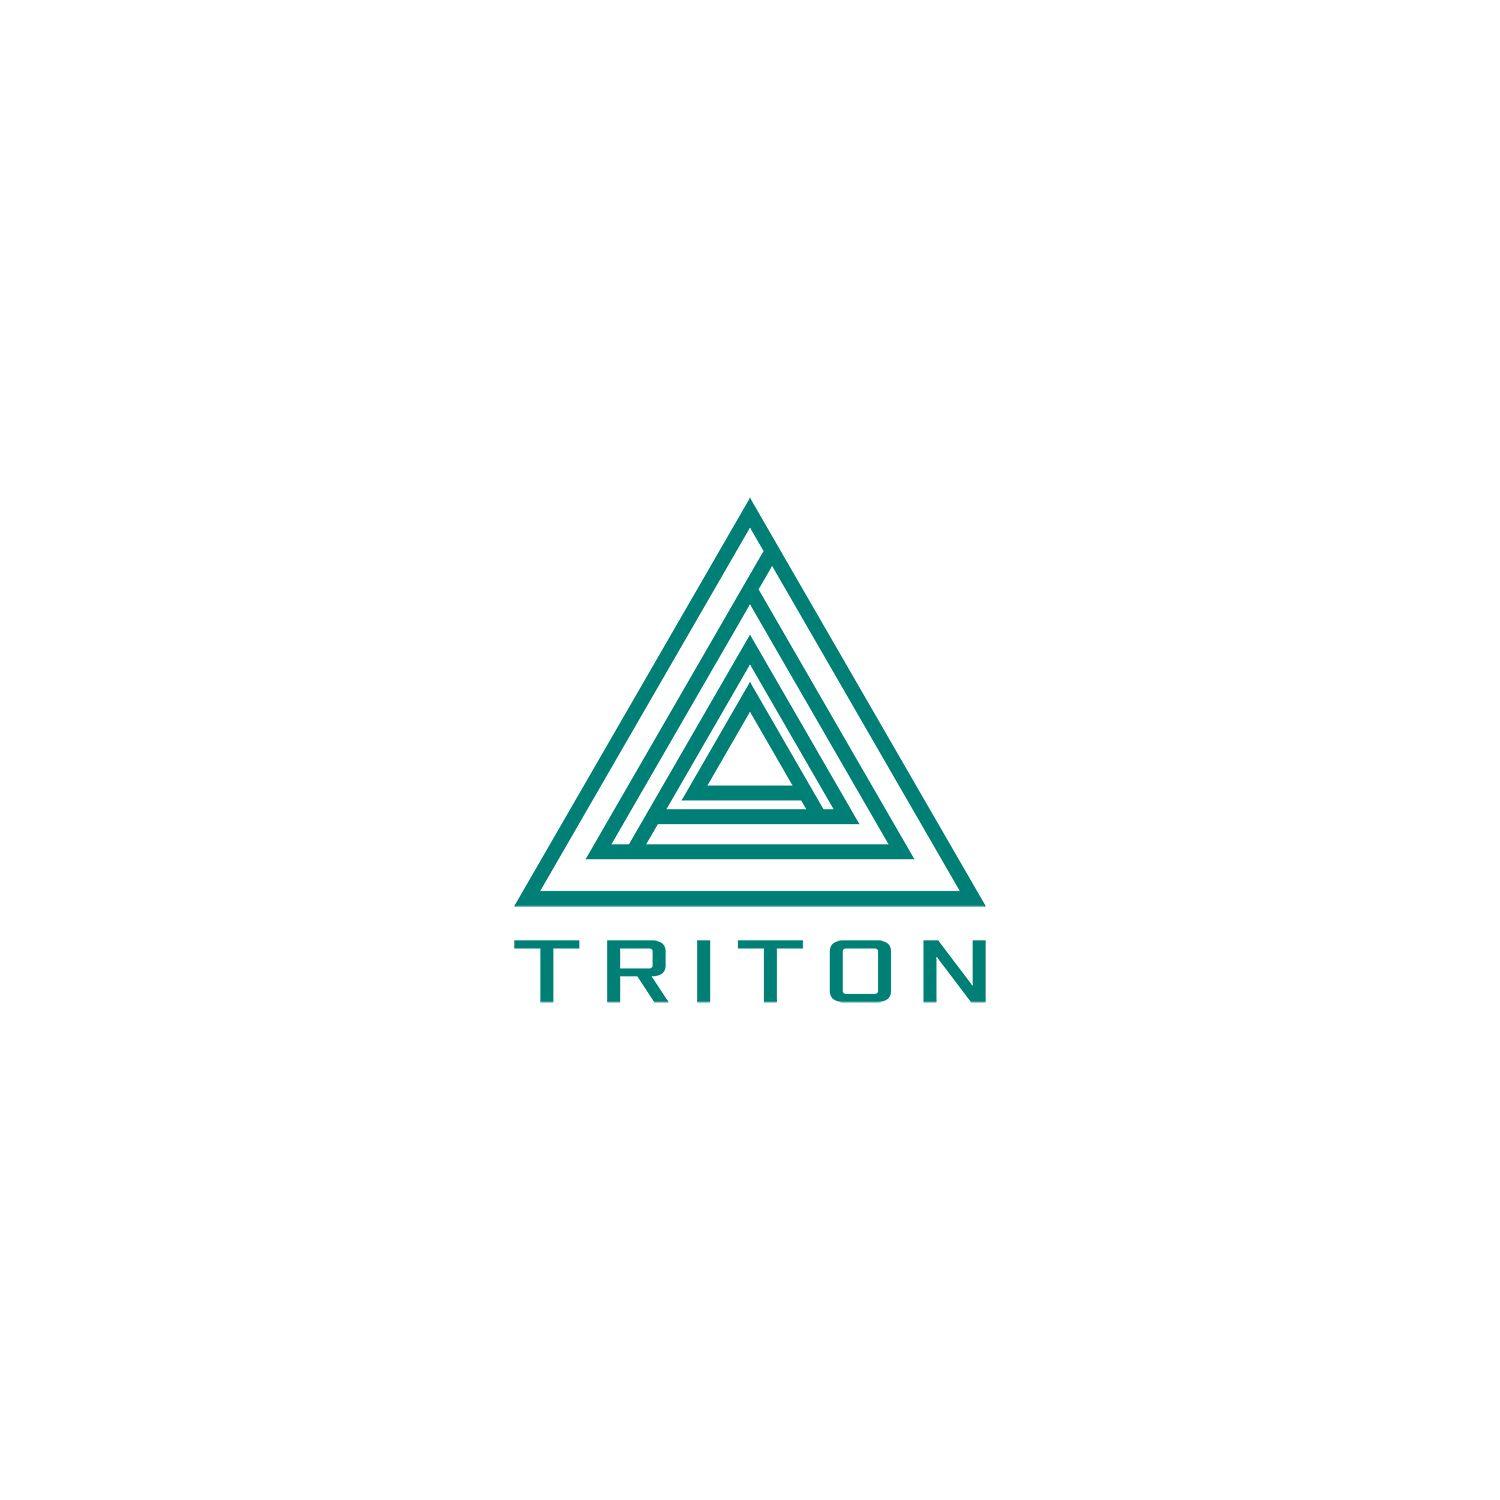 Triton Triangle Logo - Logo Design for Triton by bram_pj | Design #18418523